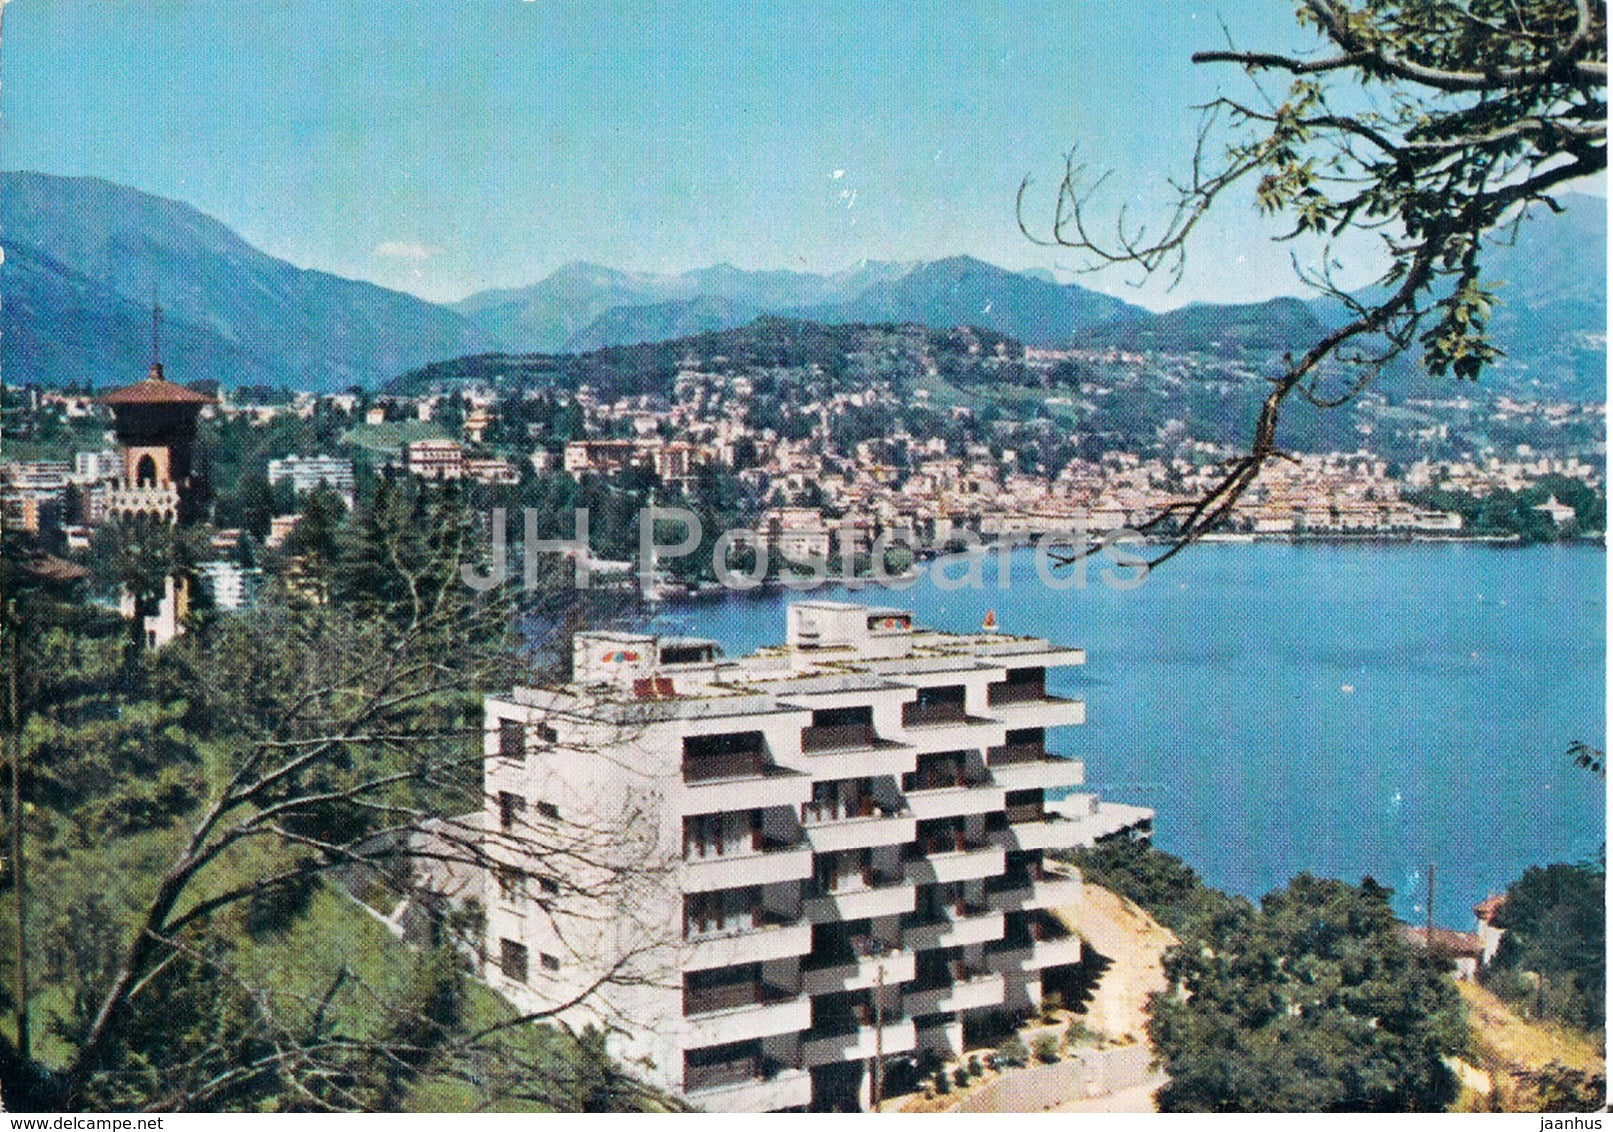 Casa Montebello - Switzerland - unused - JH Postcards